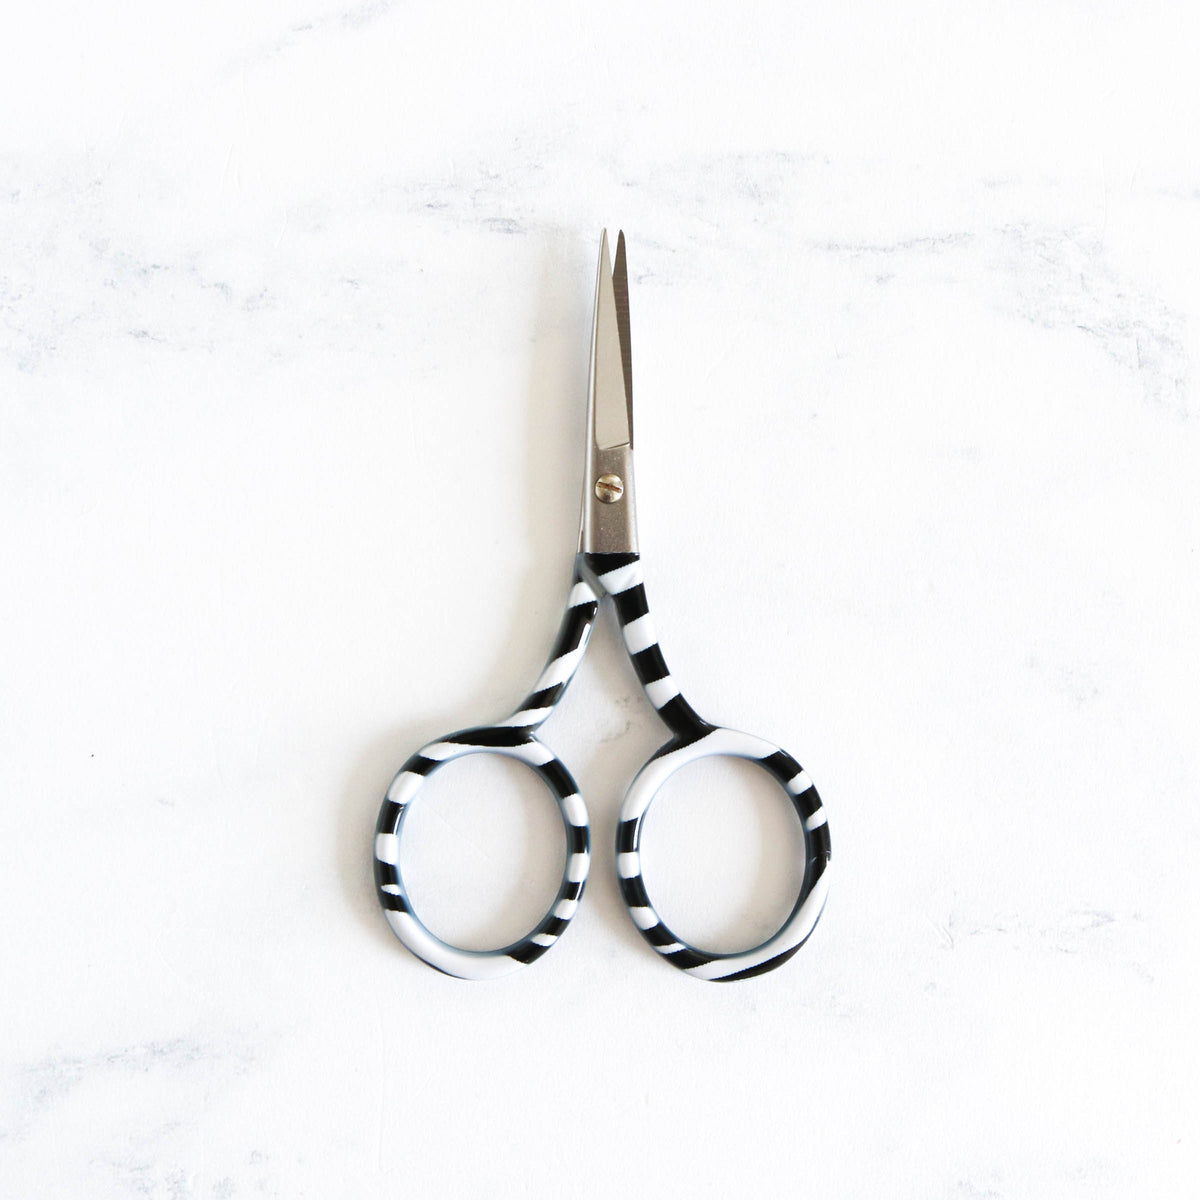 Patterned Embroidery Scissors - Zebra Black + White